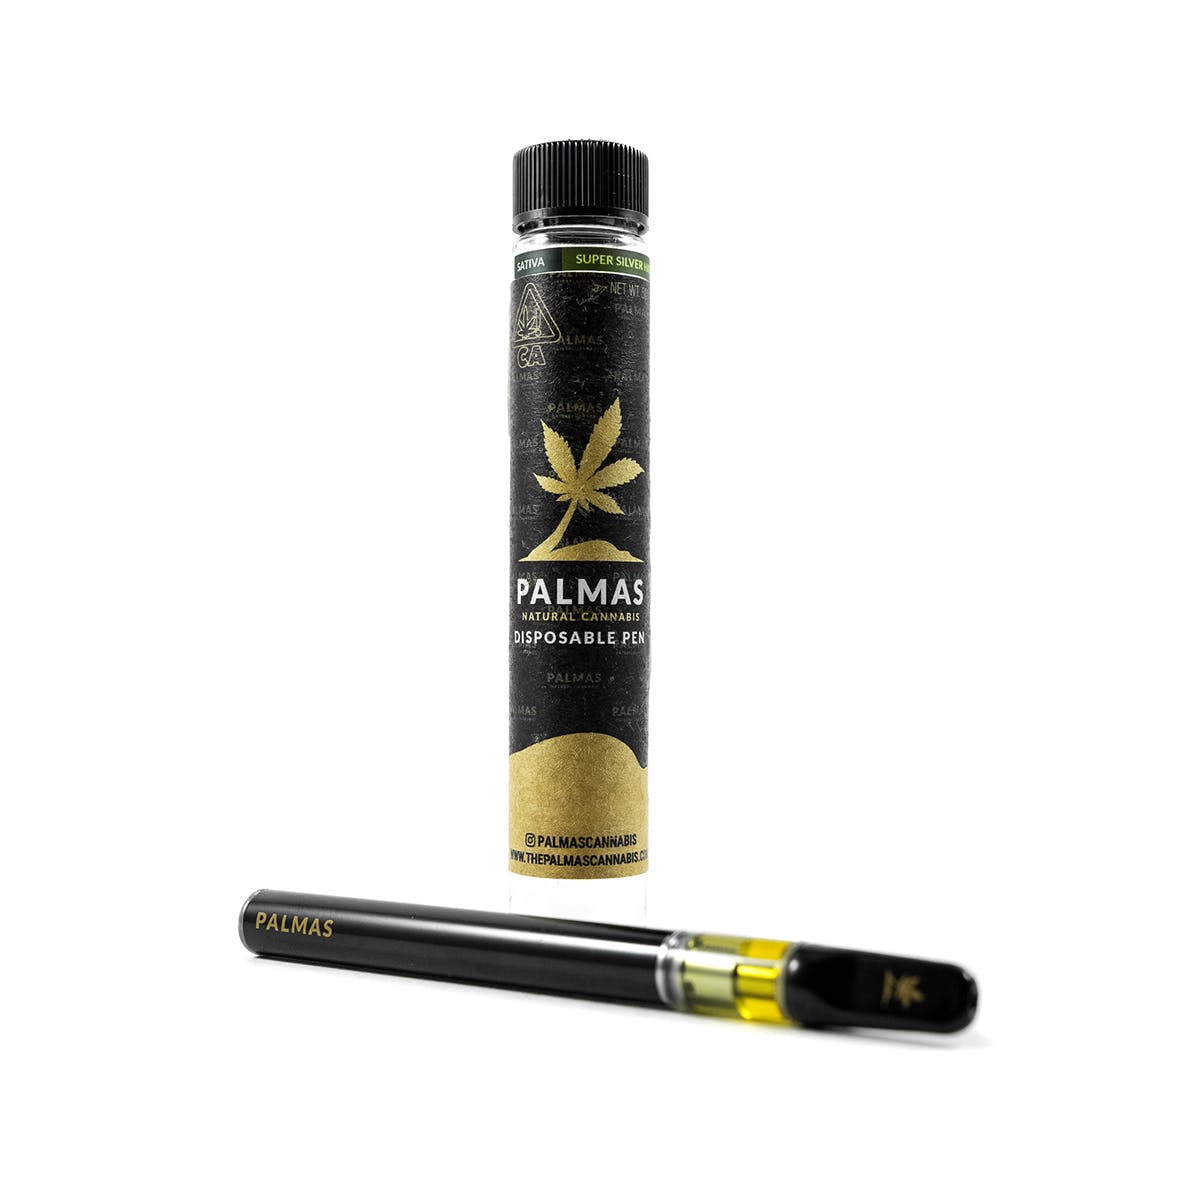 marijuana-dispensaries-true-central-20-cap-collective-in-los-angeles-palmas-disposable-super-silver-haze-500mg